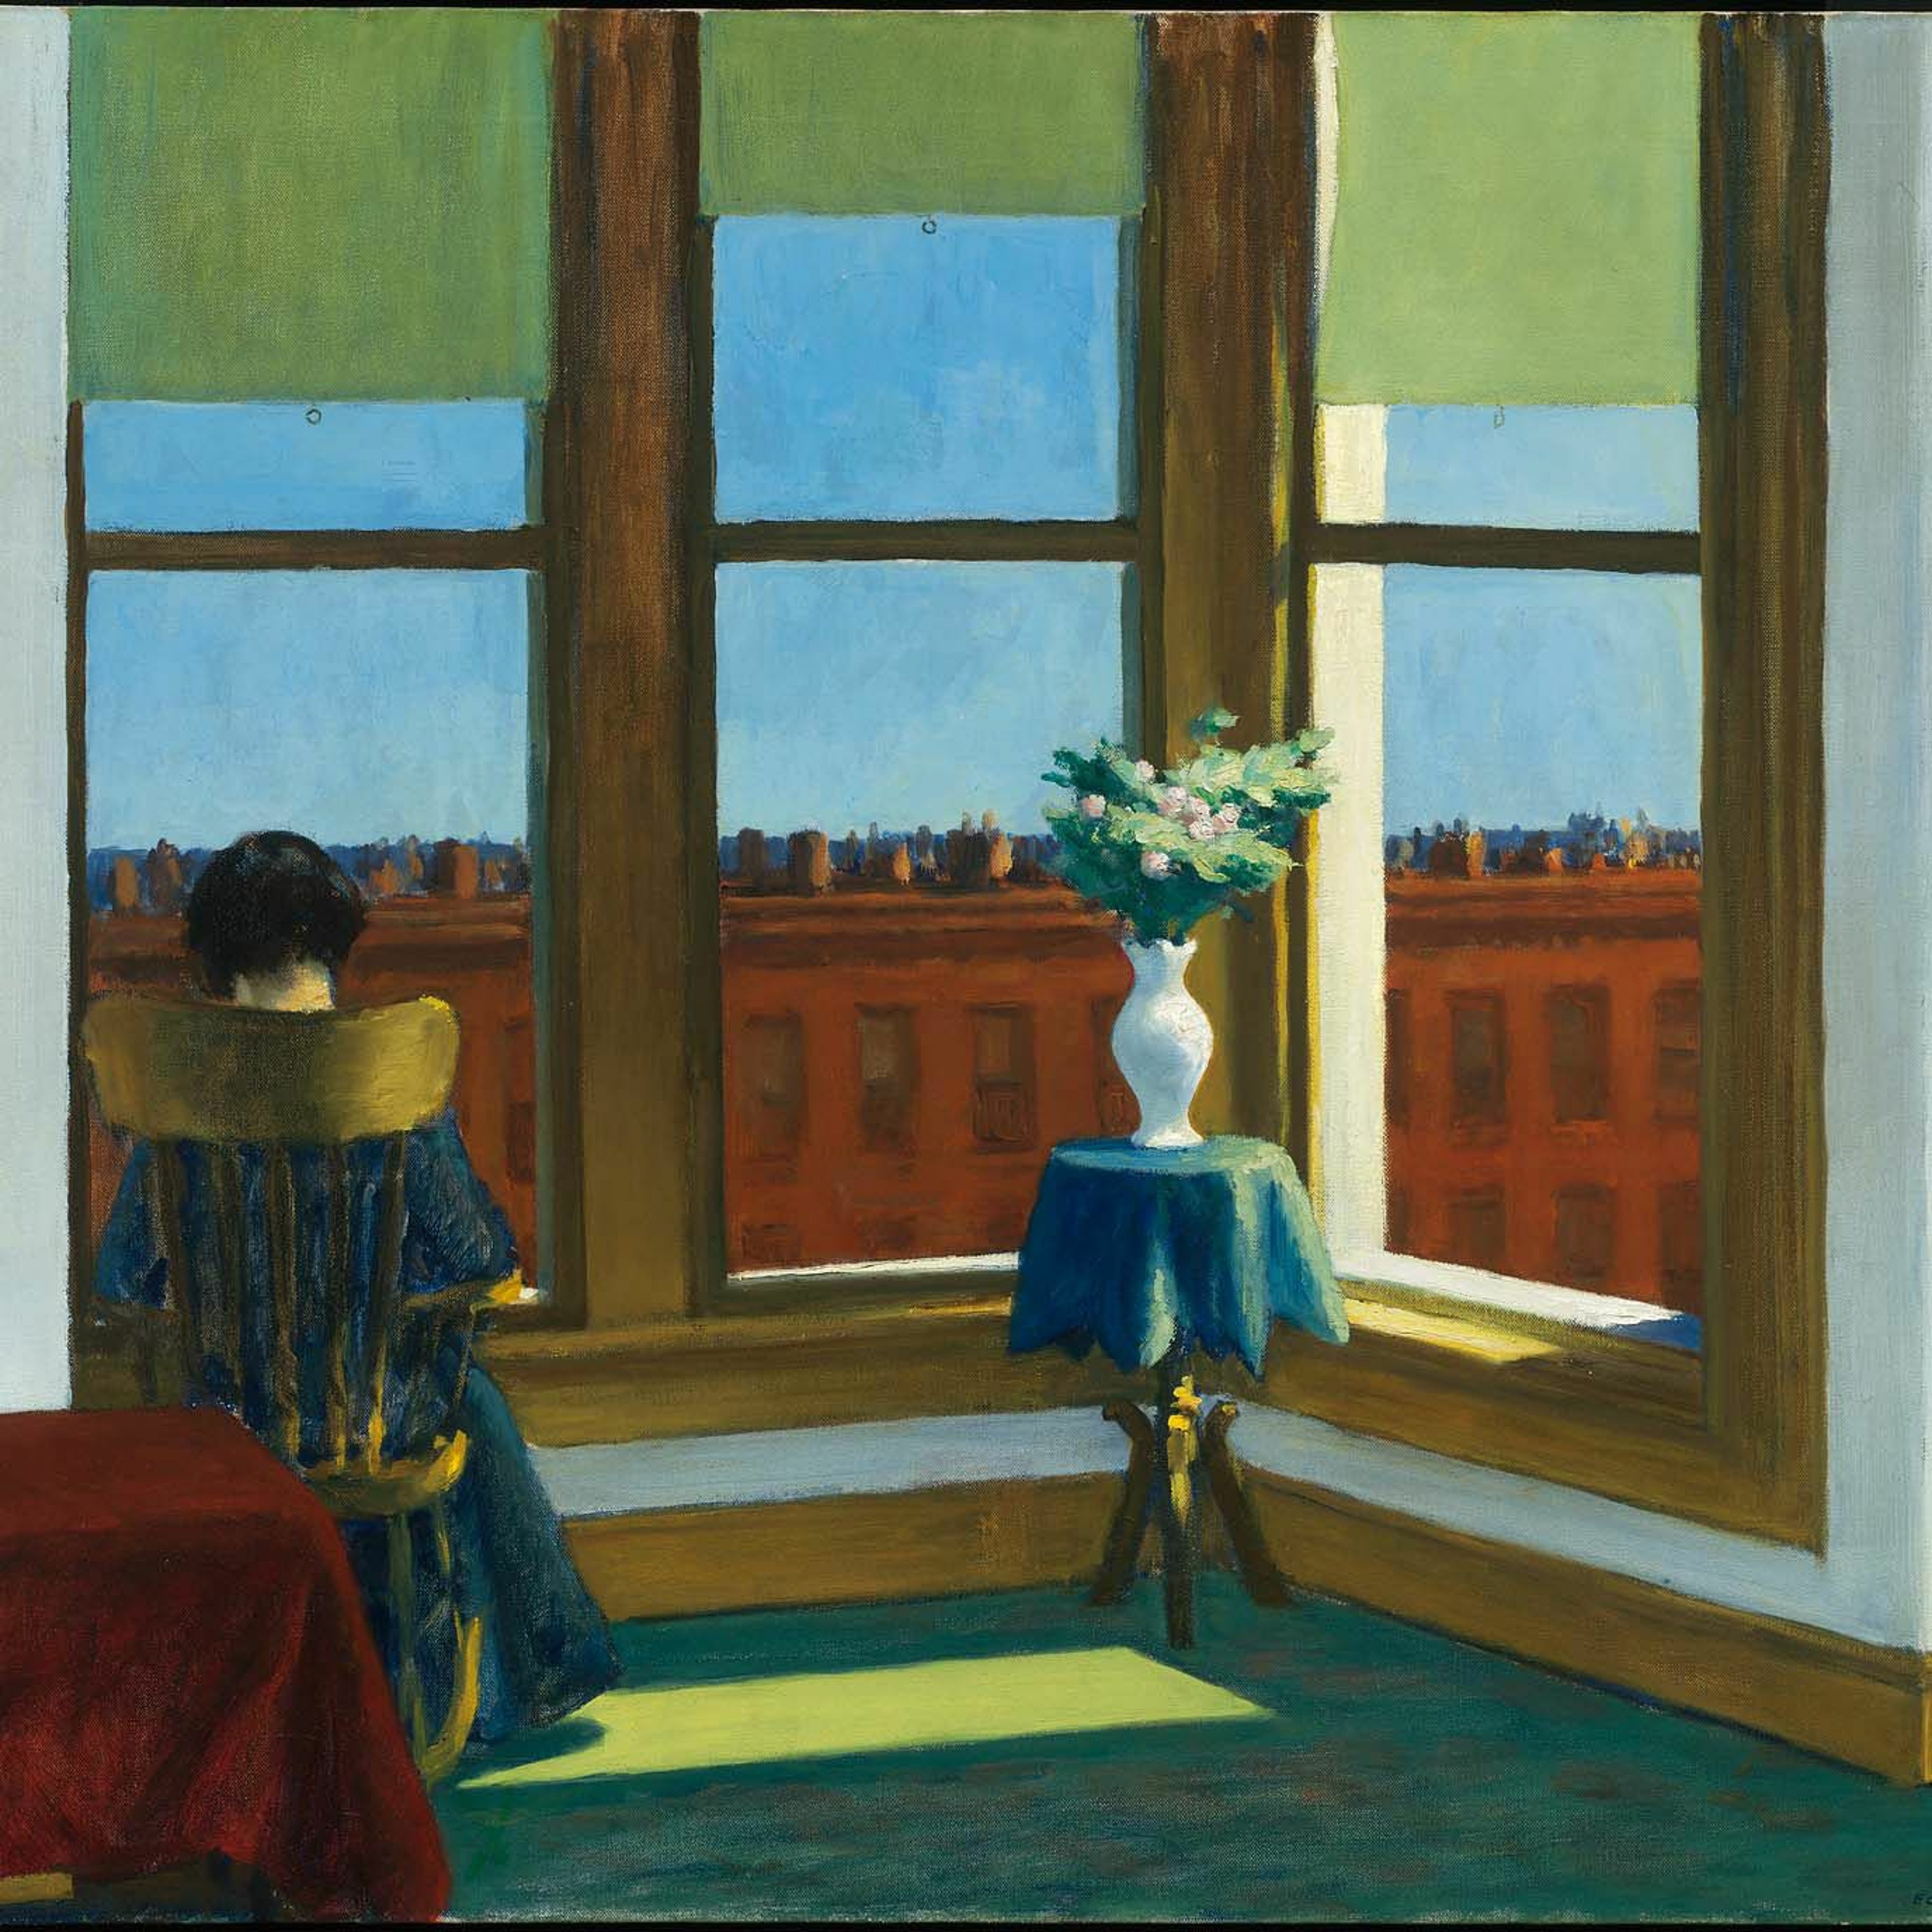 Ep. 13 - Edward Hopper's "Room in Brooklyn" (1932)